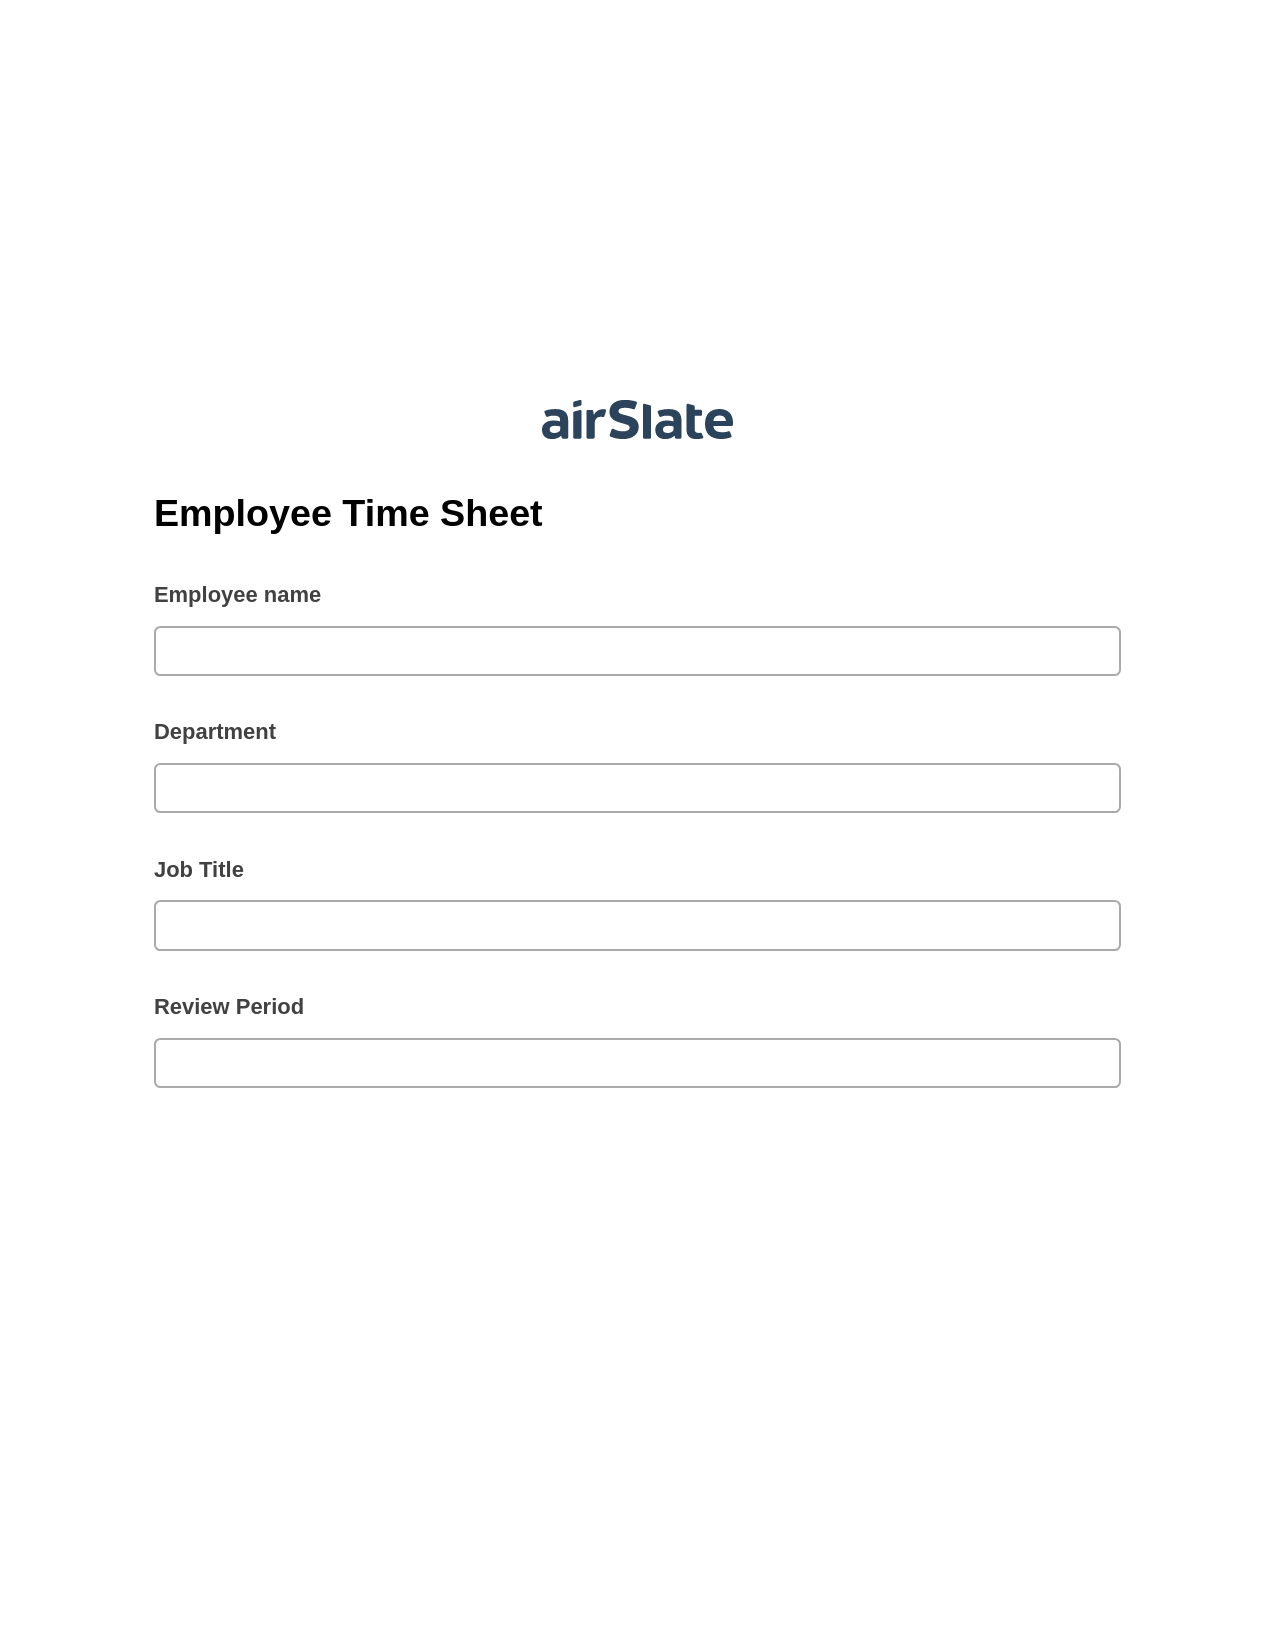 Employee Time Sheet Pre-fill Document Bot, Update Audit Trail Bot, Export to Google Sheet Bot